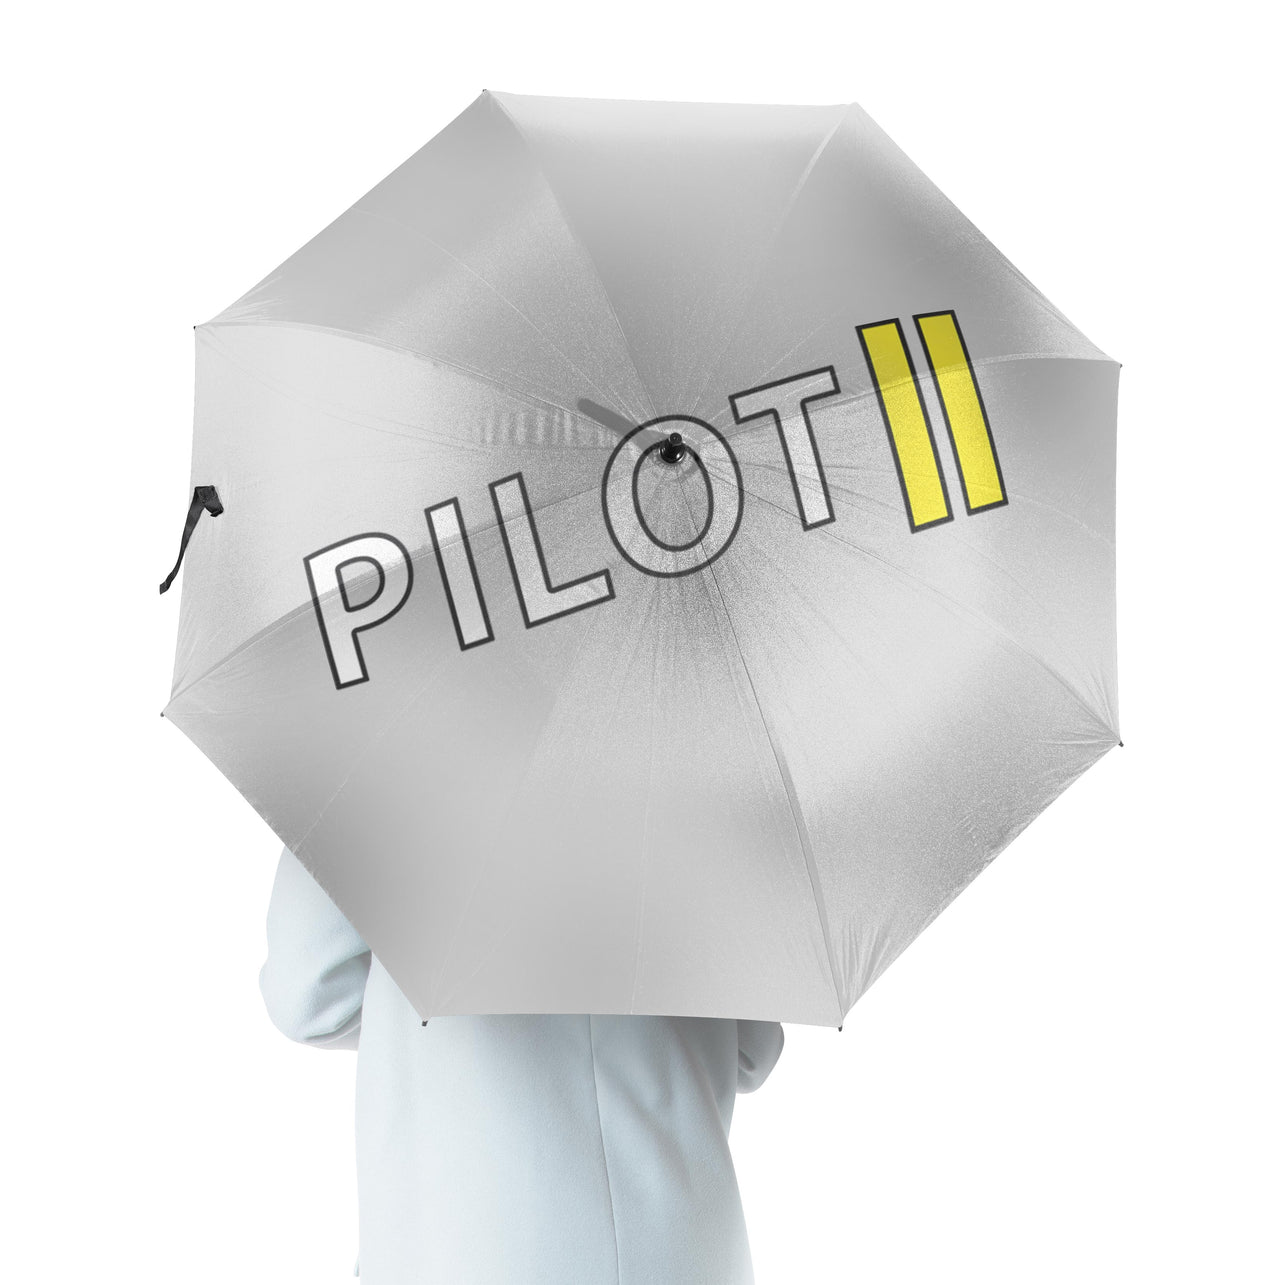 Pilot & Stripes (2 Lines) Designed Umbrella